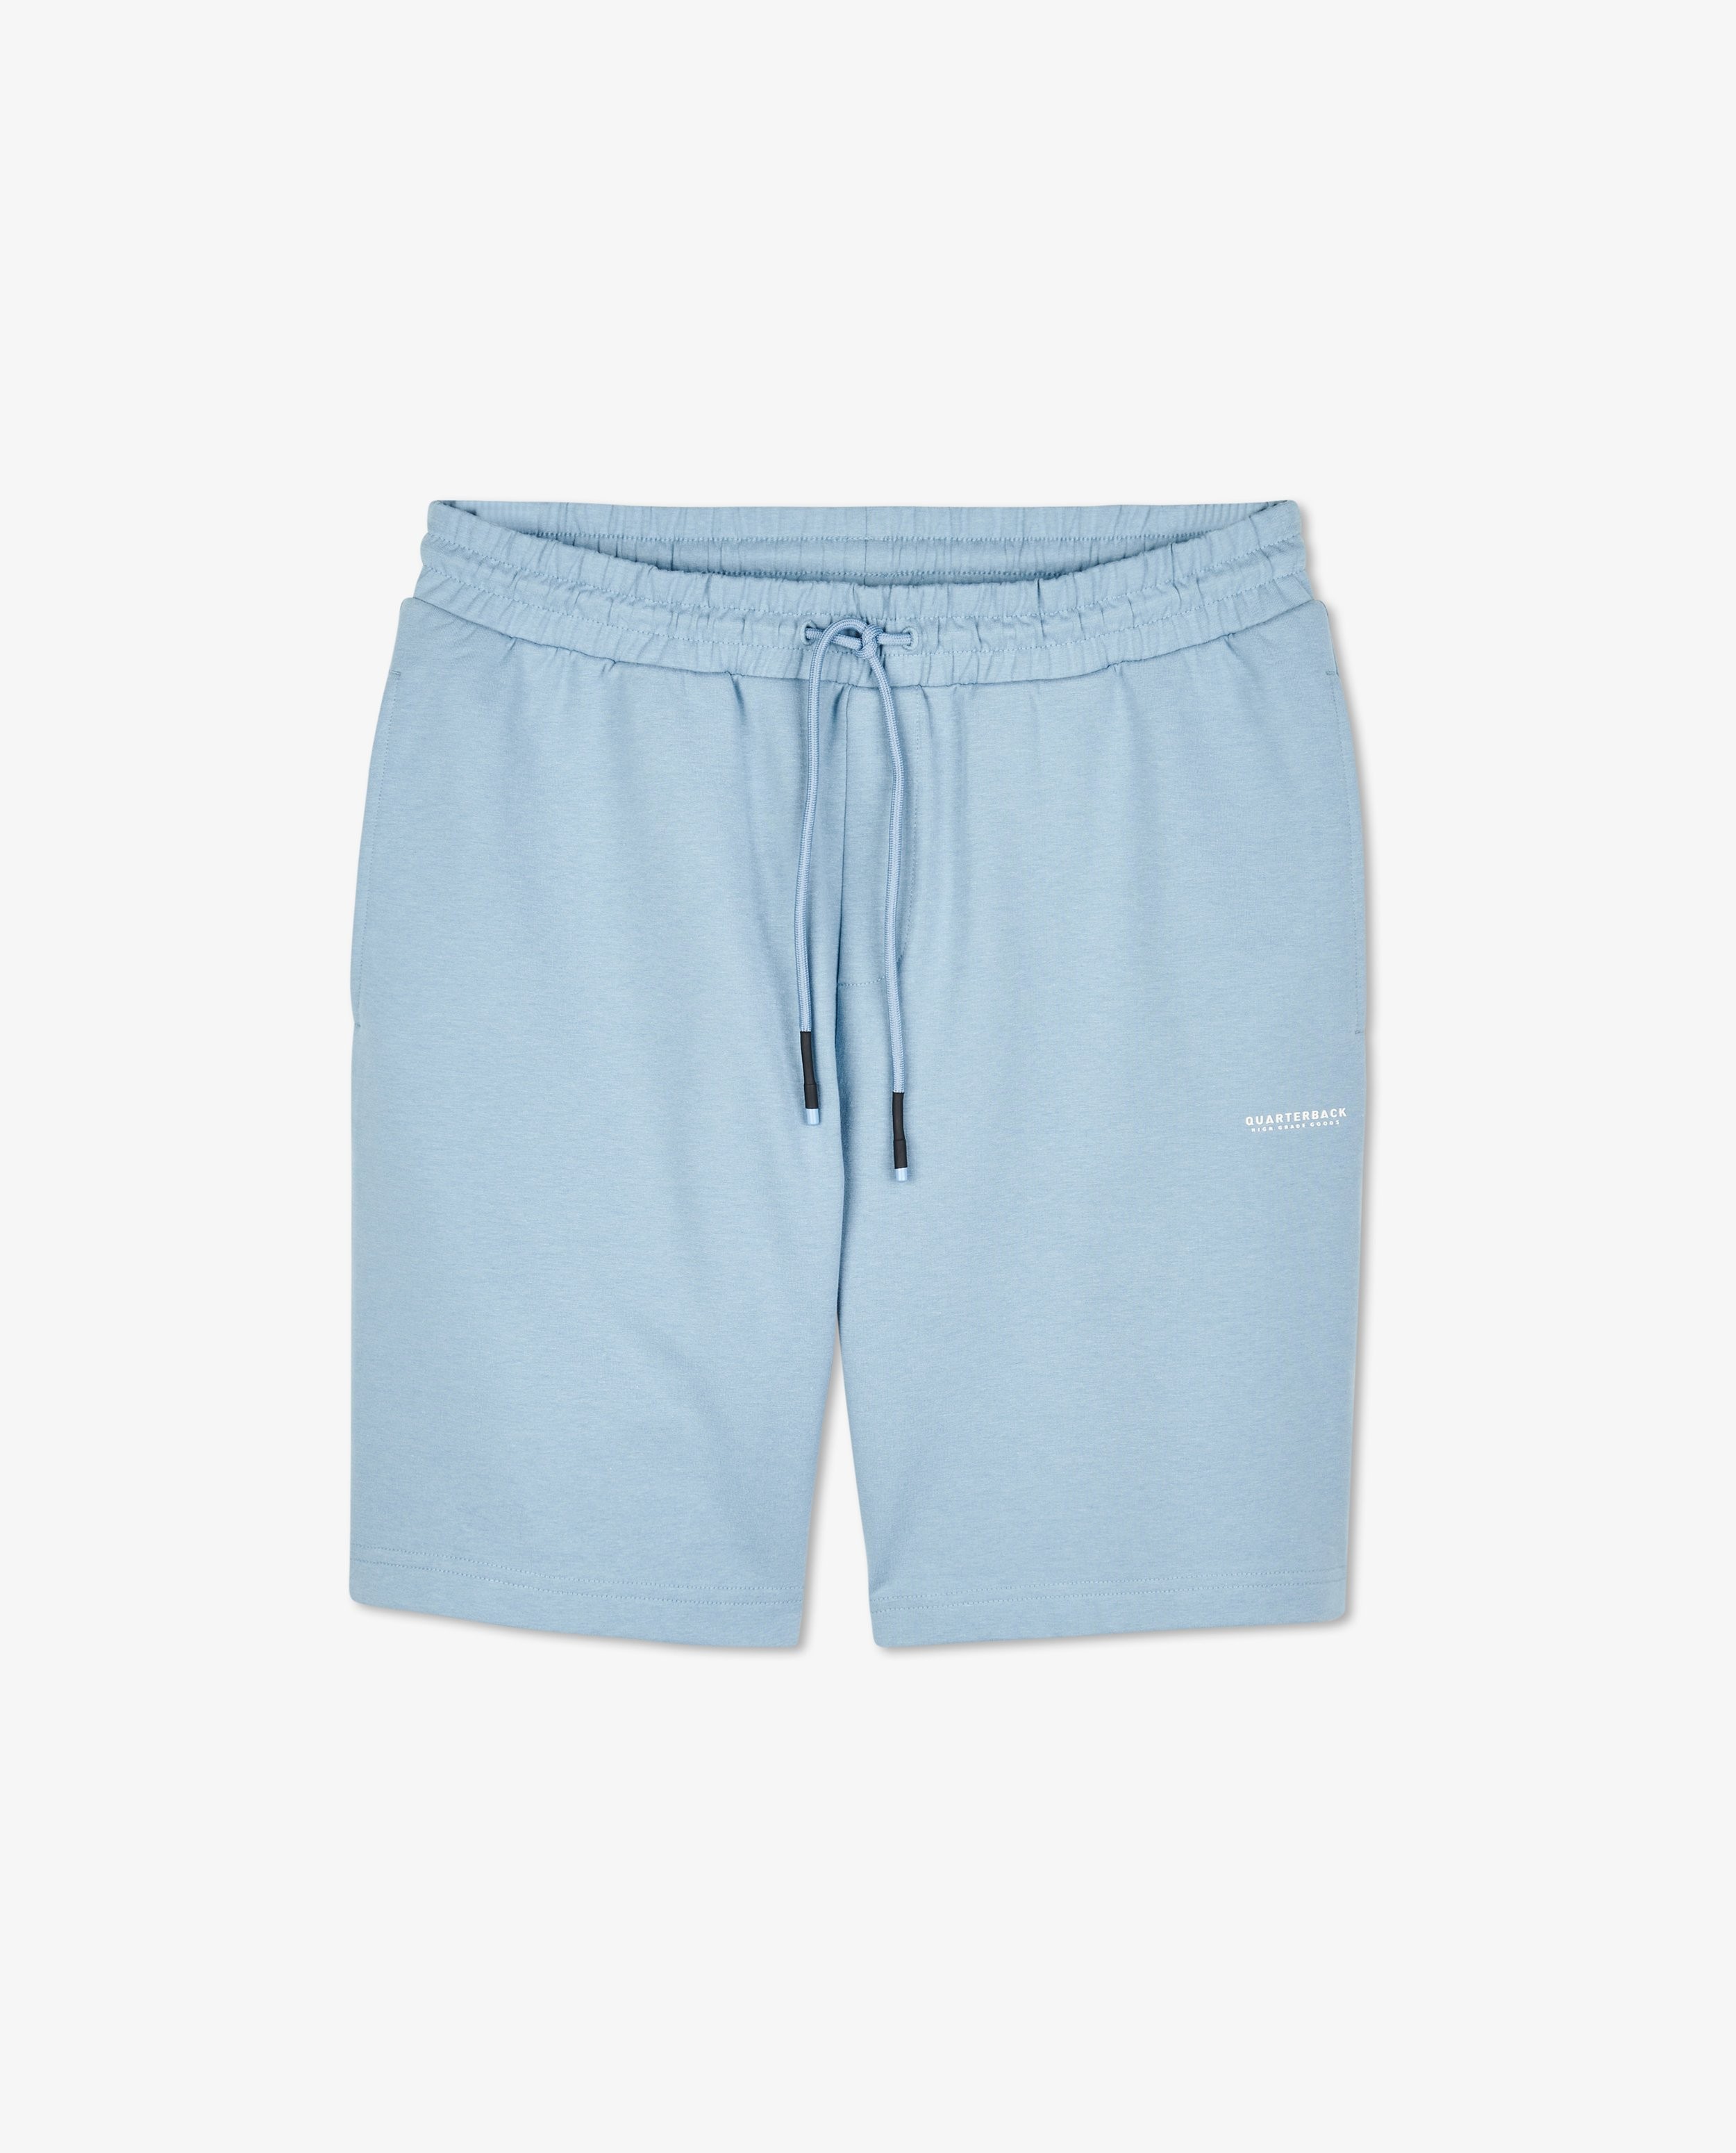 Shorts - Short bleu clair avec cordon de serrage sous tunnel